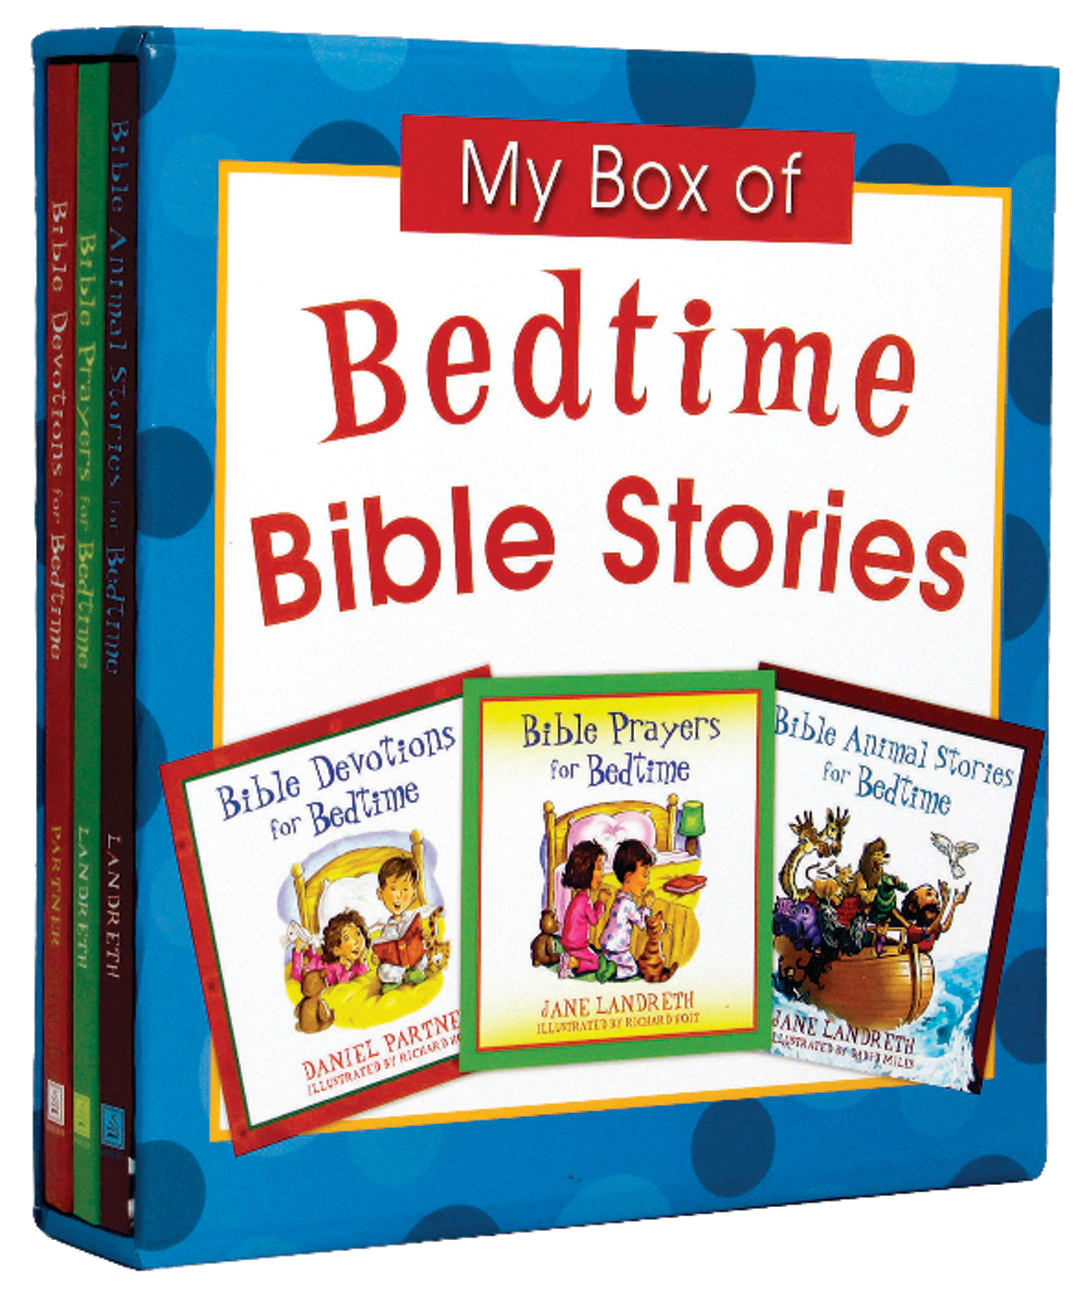 My Box of Bedtime Bible Stories by Jane Landreth | Koorong